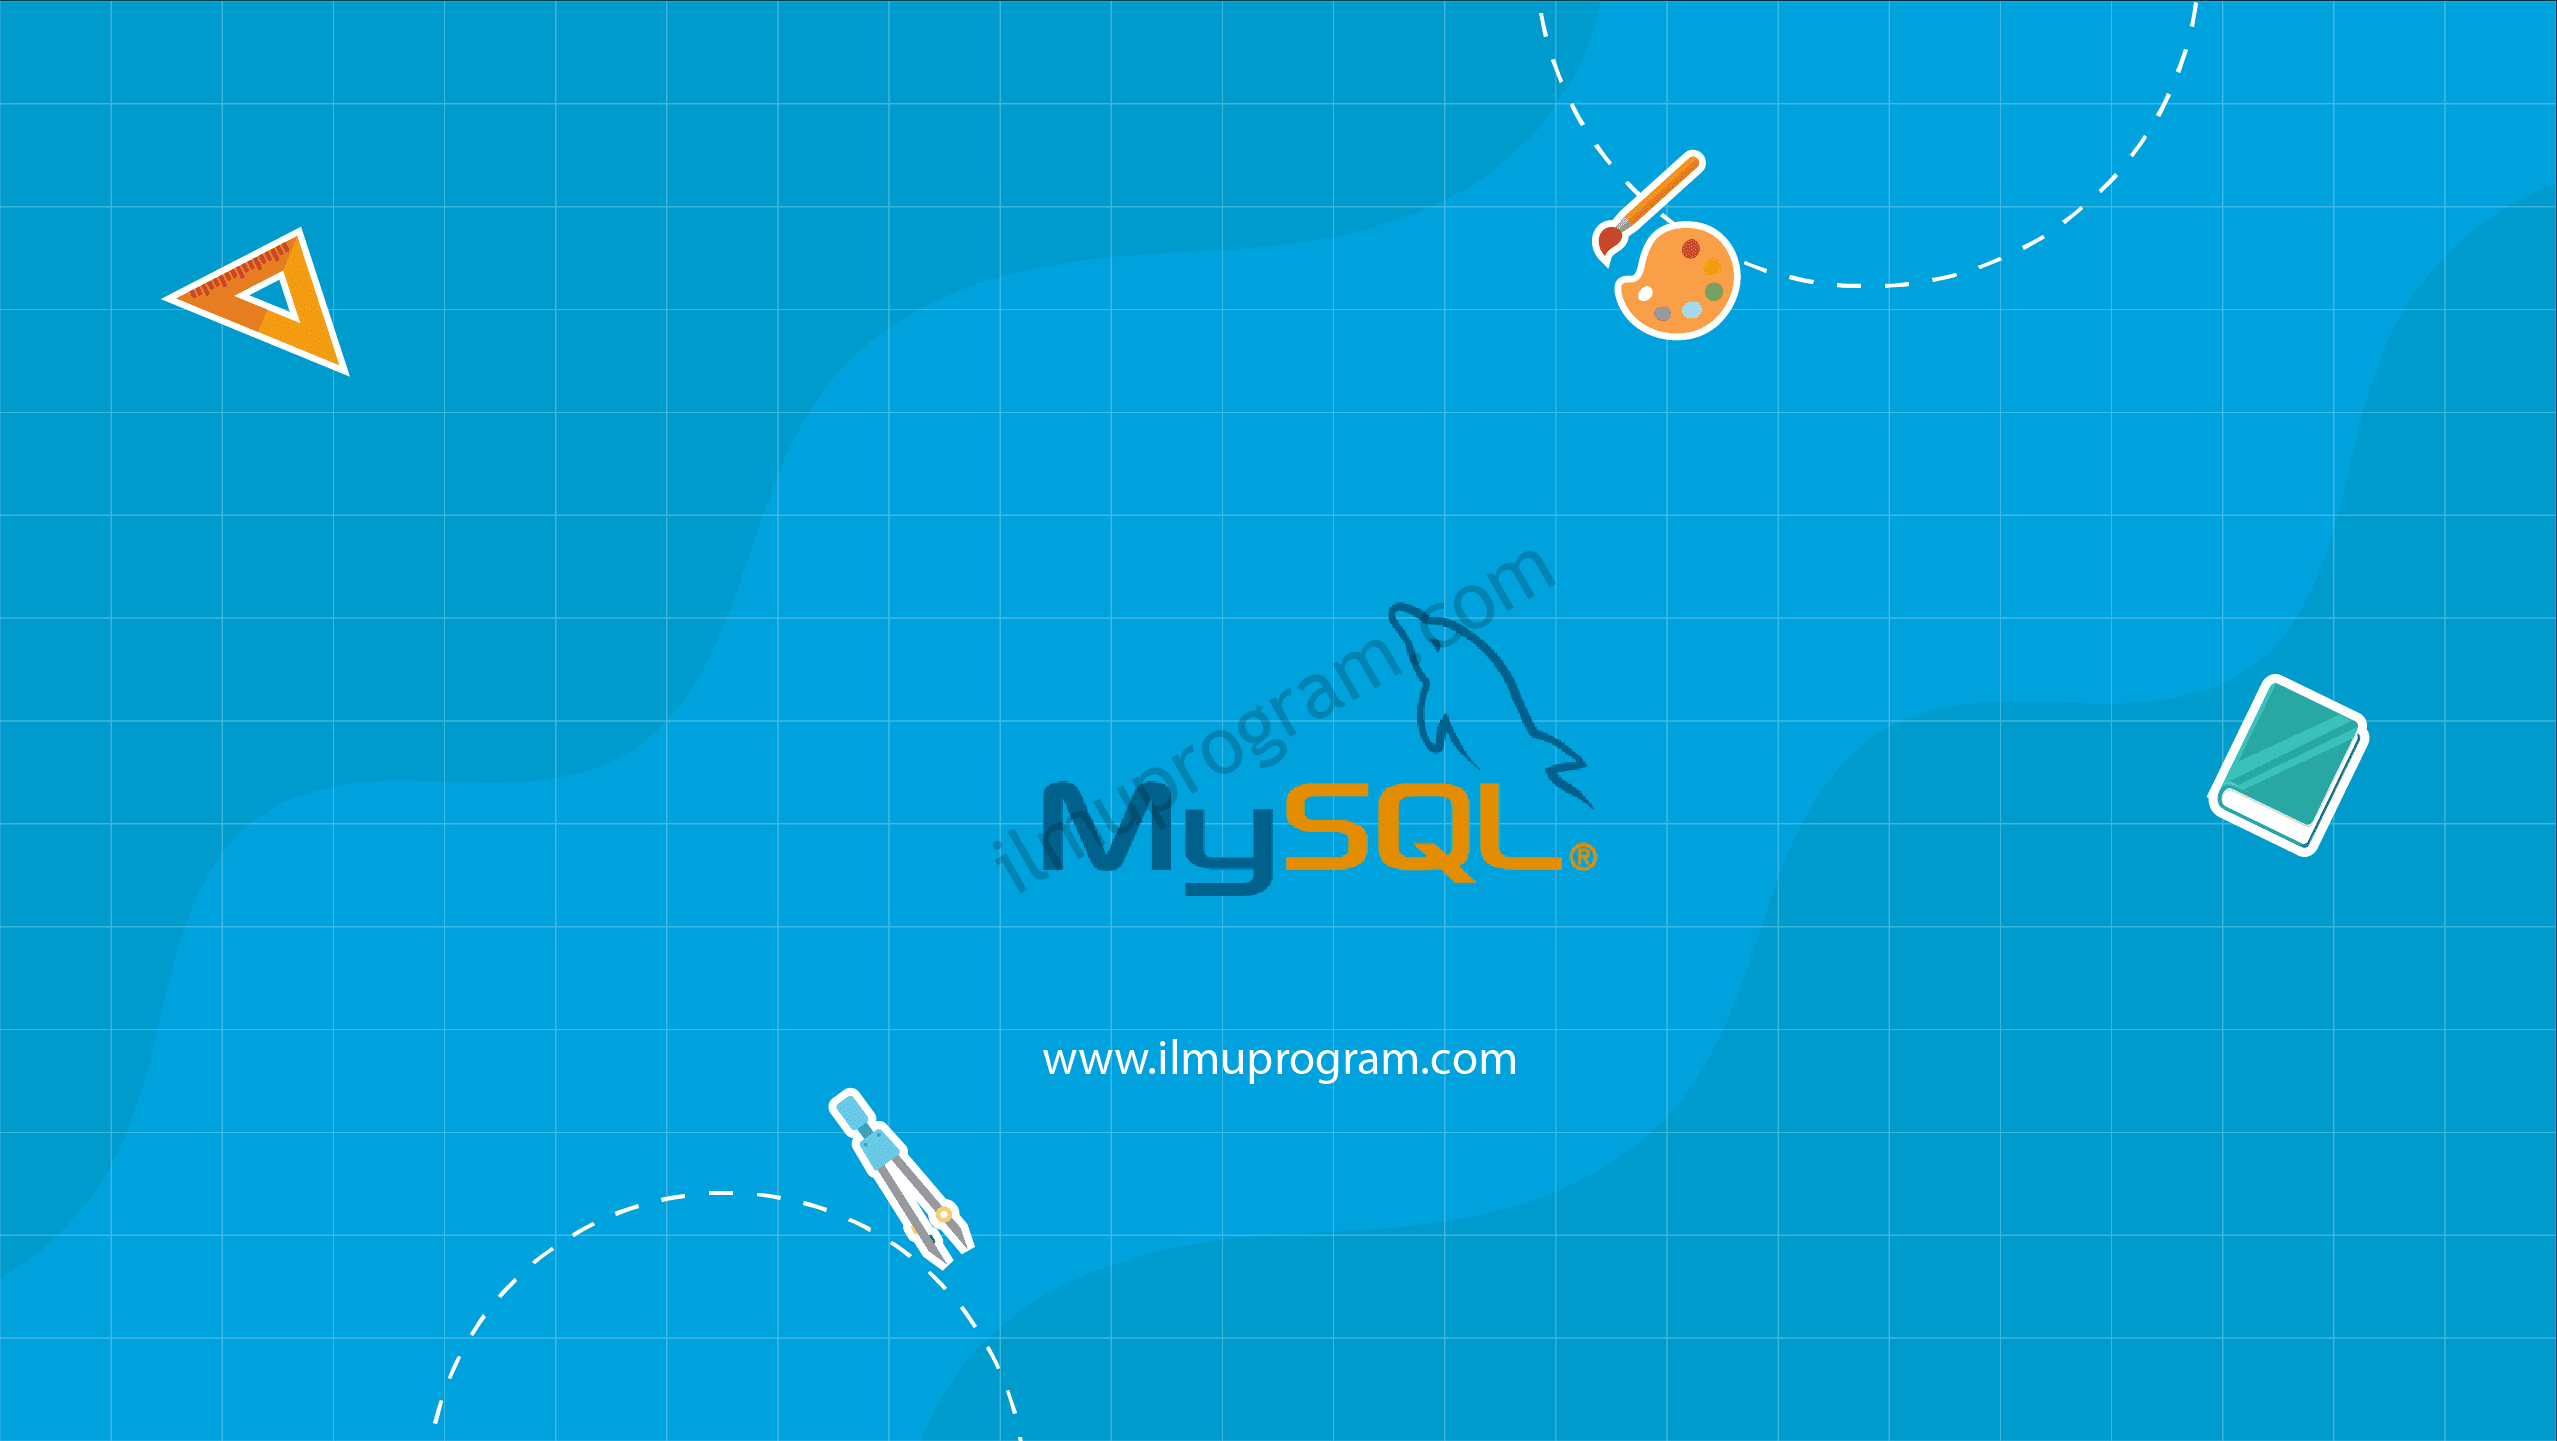 ILMUPROGRAM - MYSQL TUTORIAL